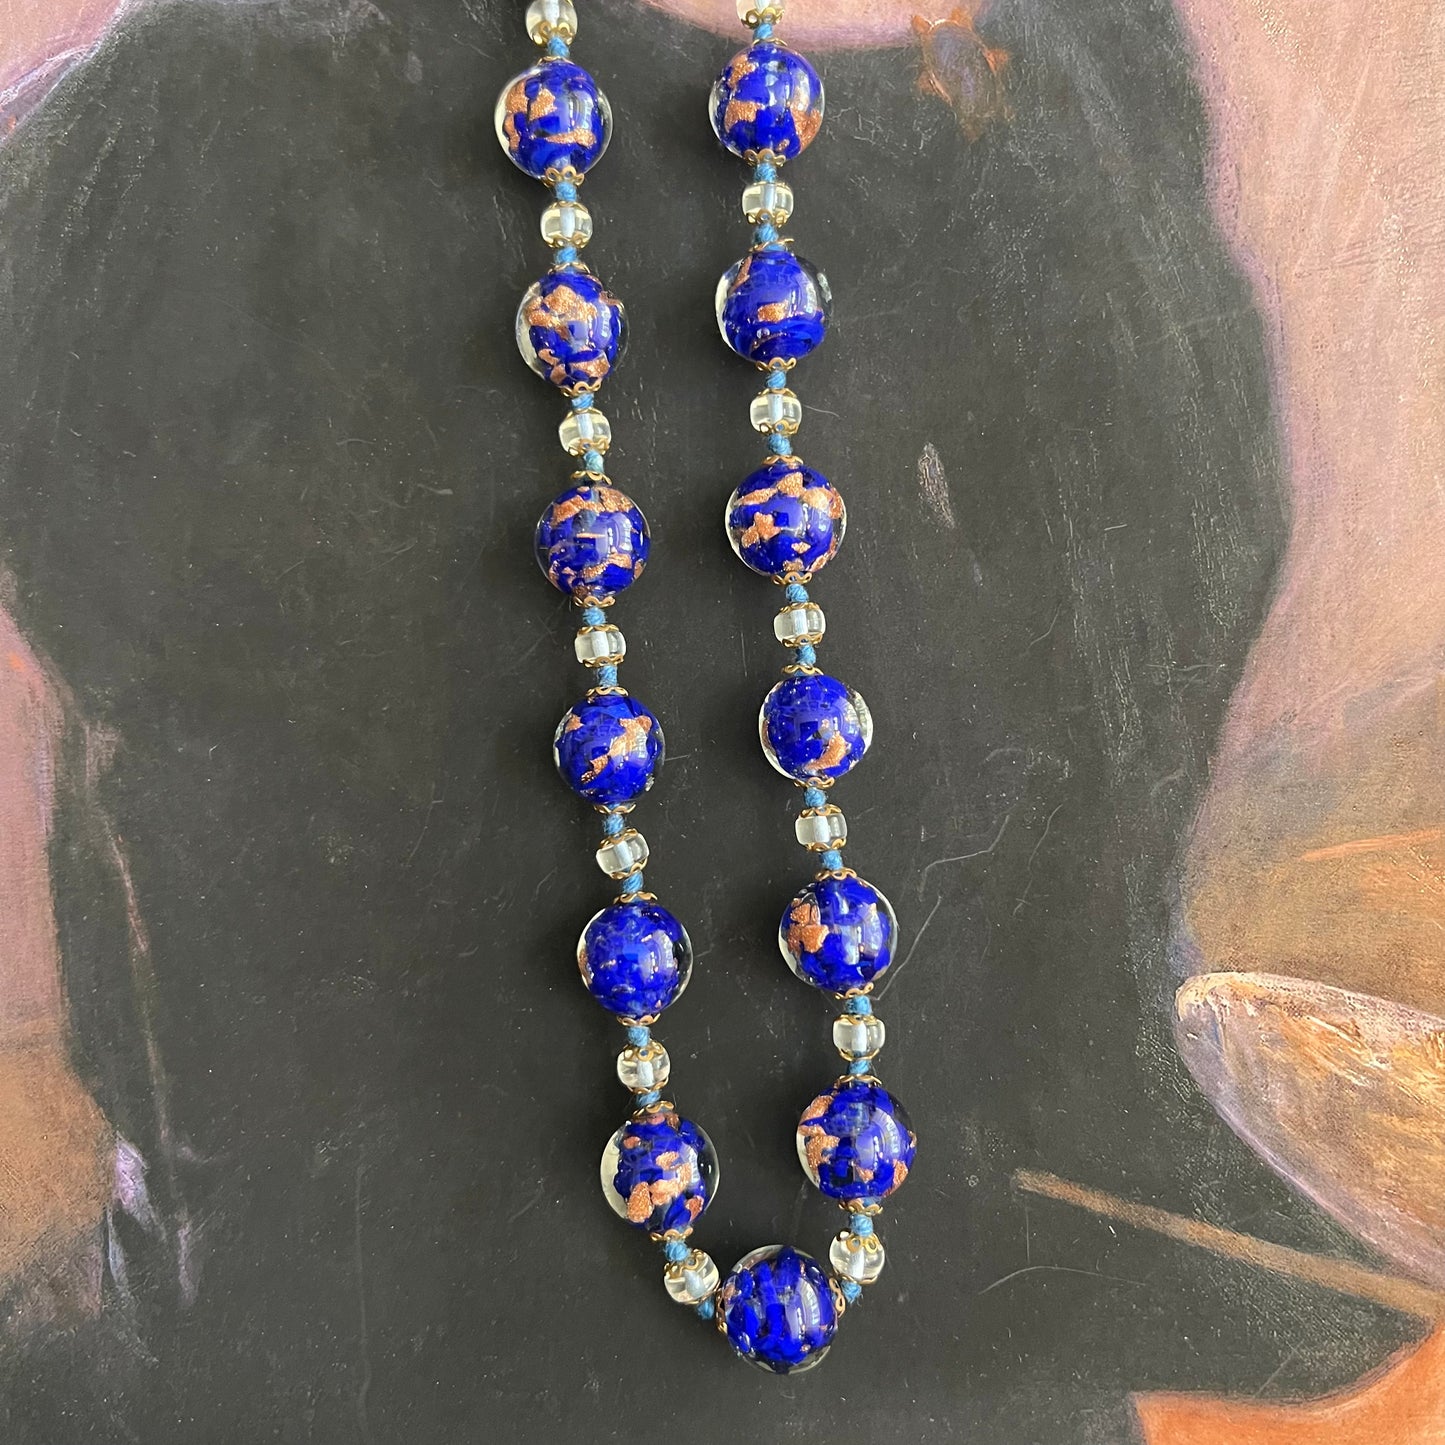 Vintage Venetian Glass Beads Necklace